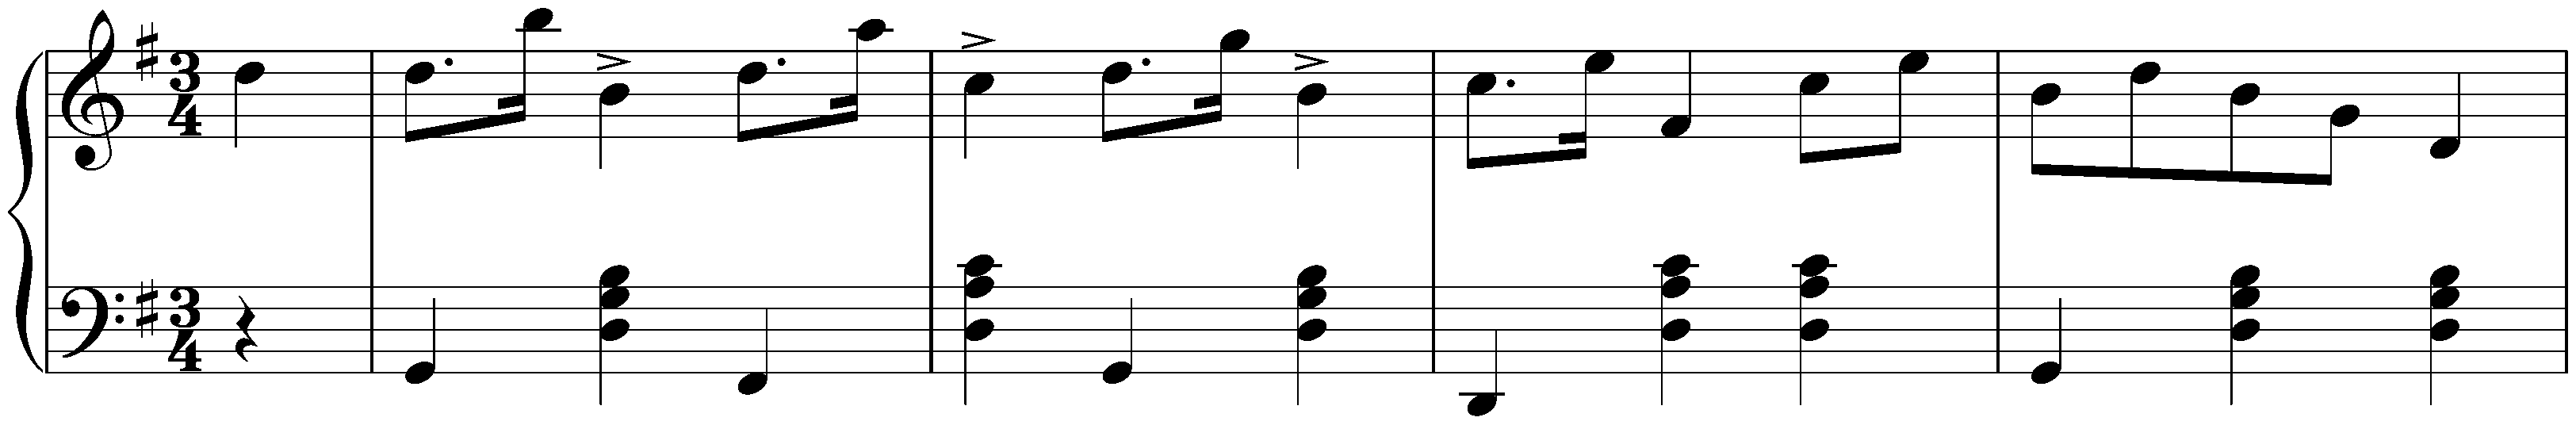 Two Waltzes, D 980; 1. G major